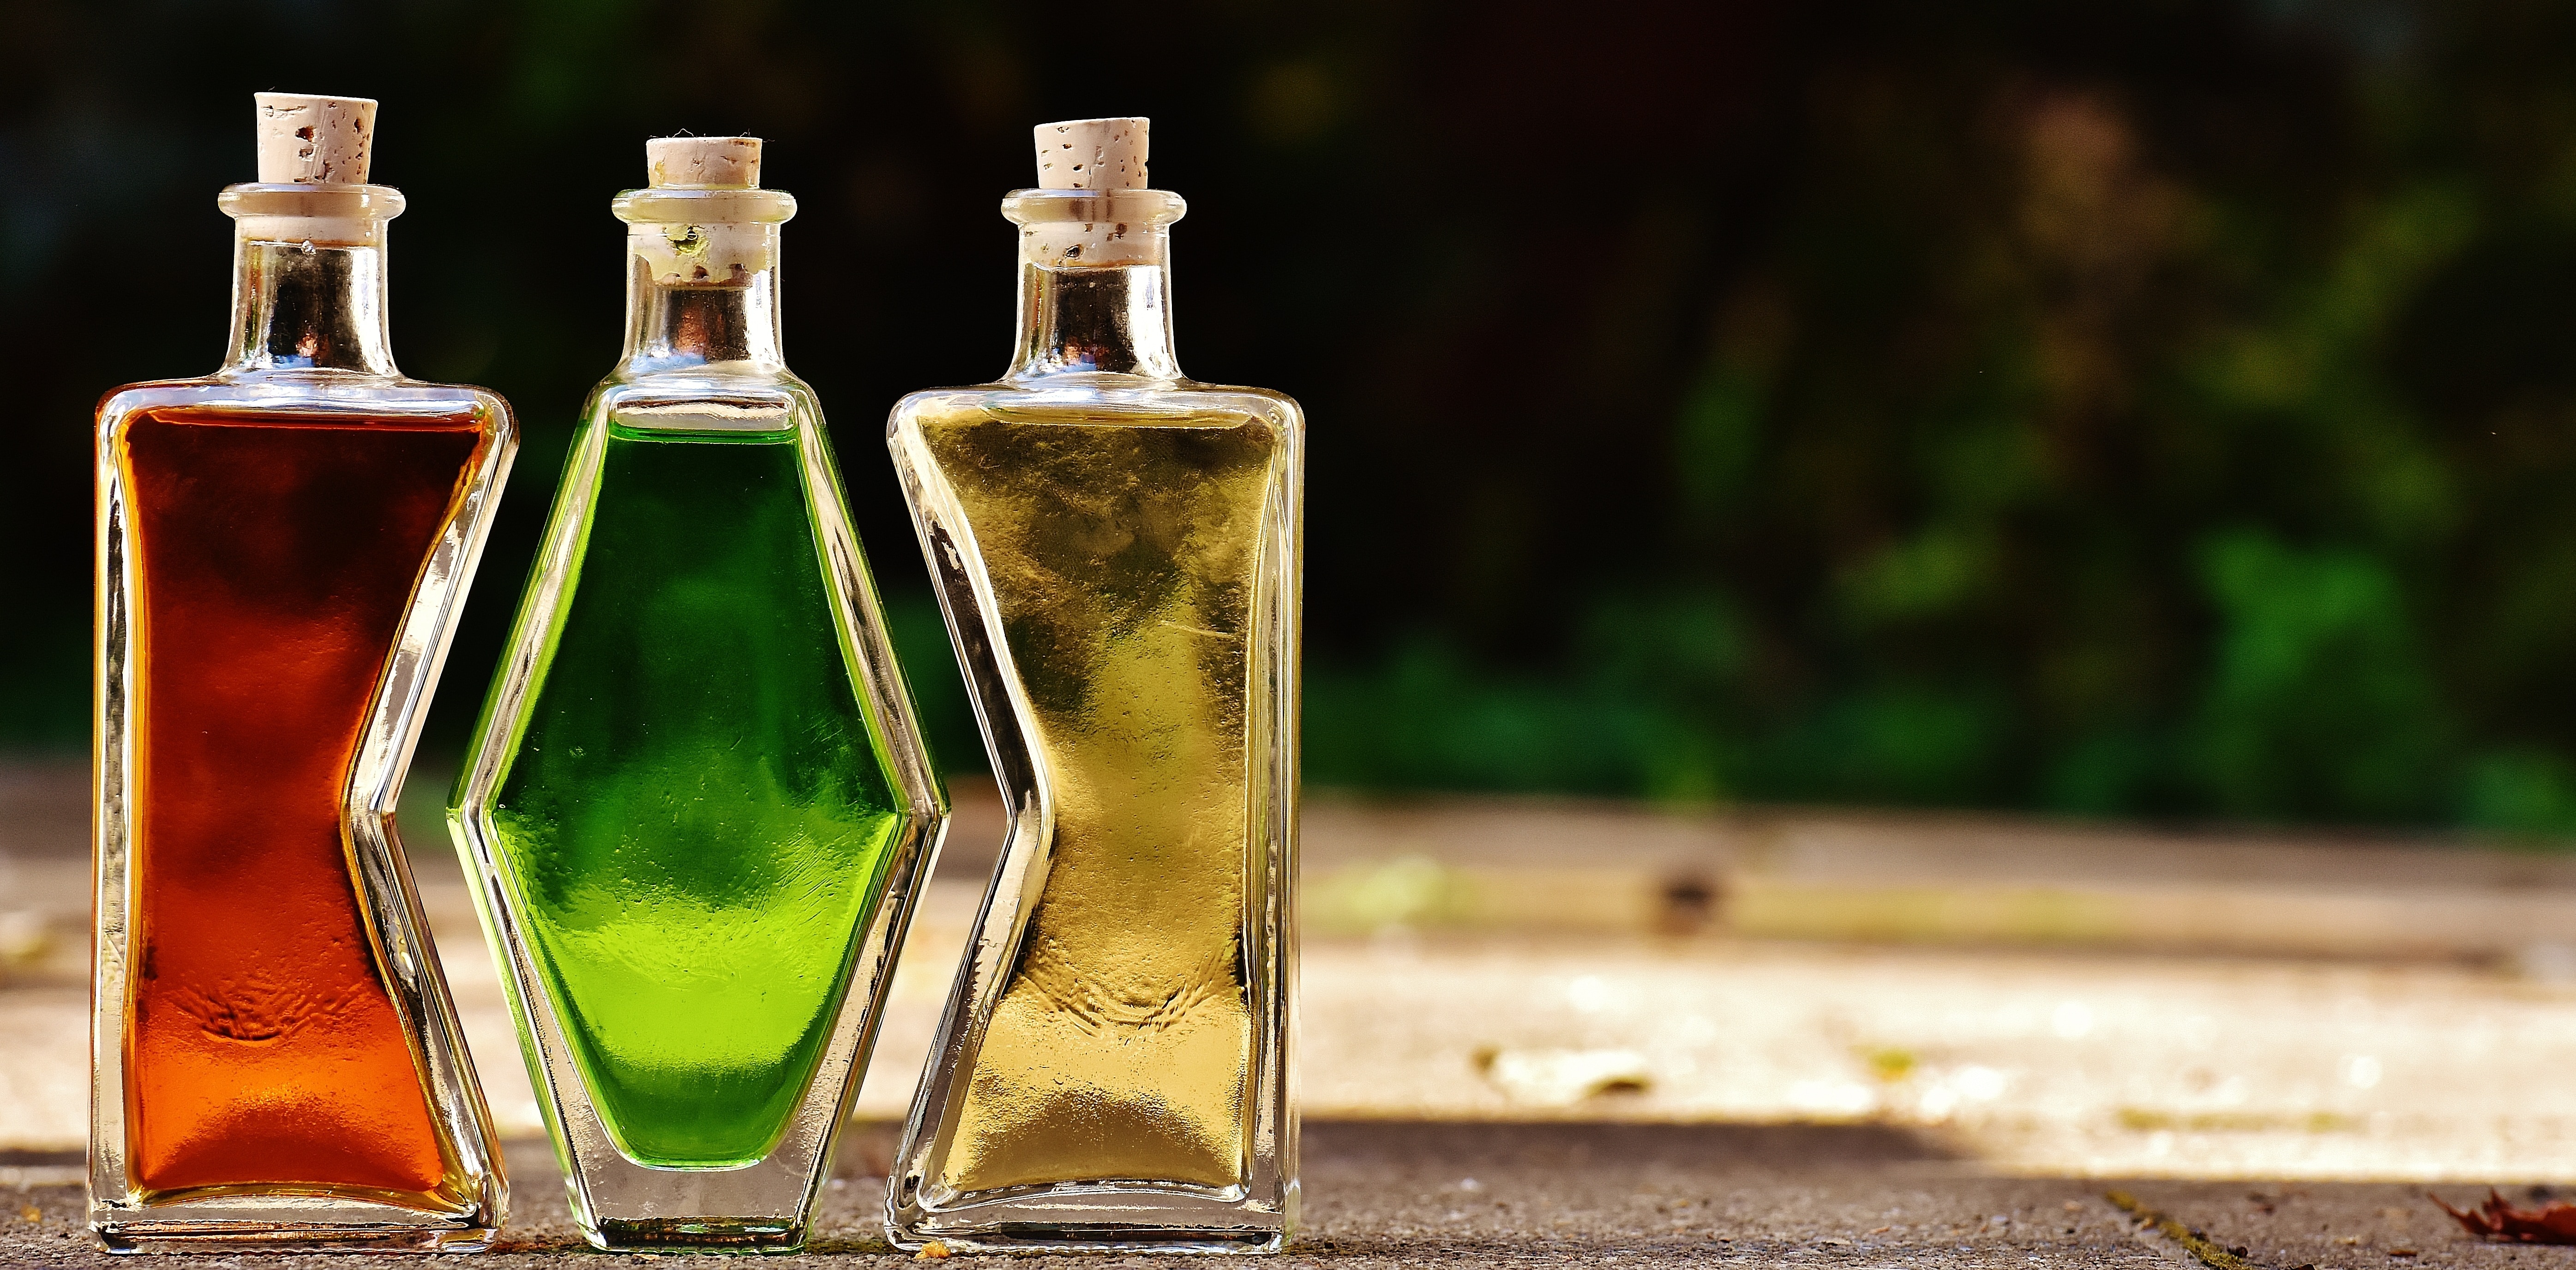 3 Perfume Glass Bottles Preview - Ley De Los Impares , HD Wallpaper & Backgrounds